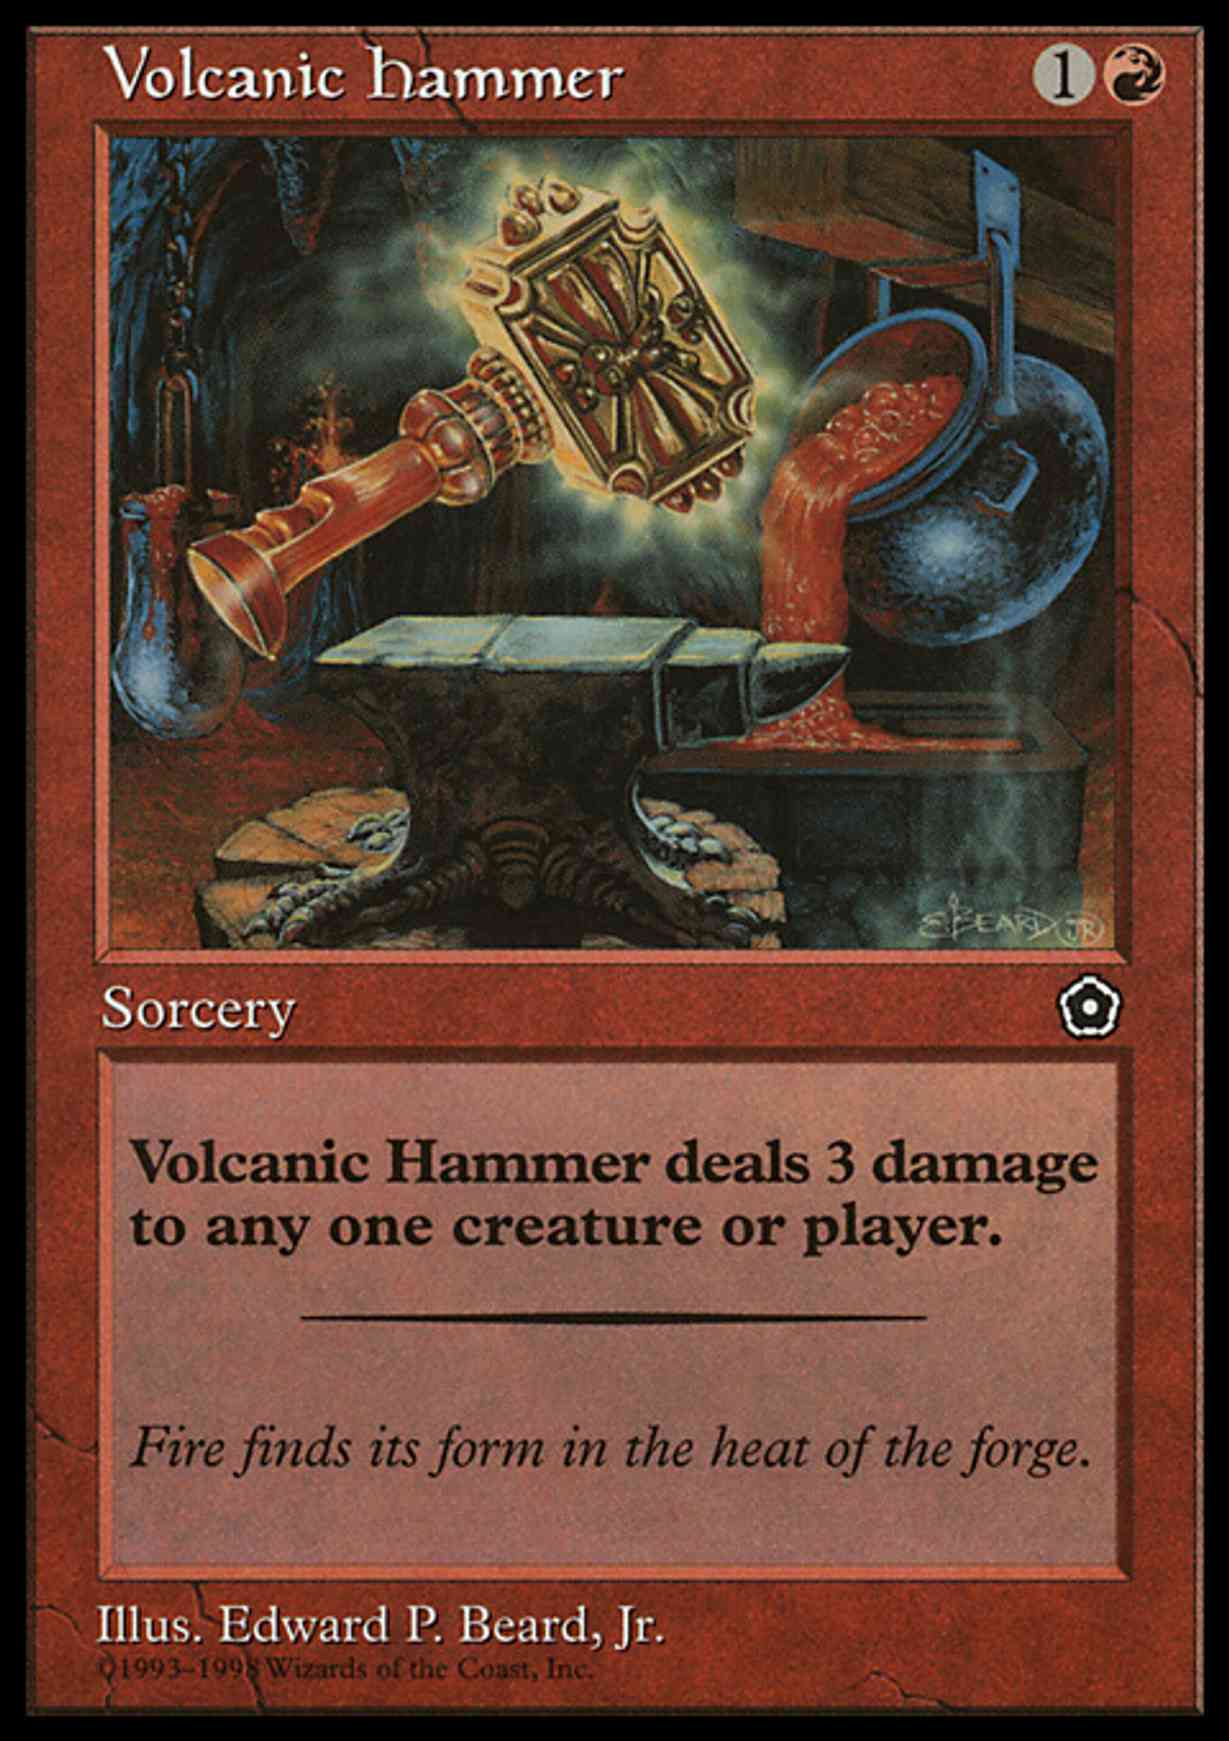 Volcanic Hammer magic card front